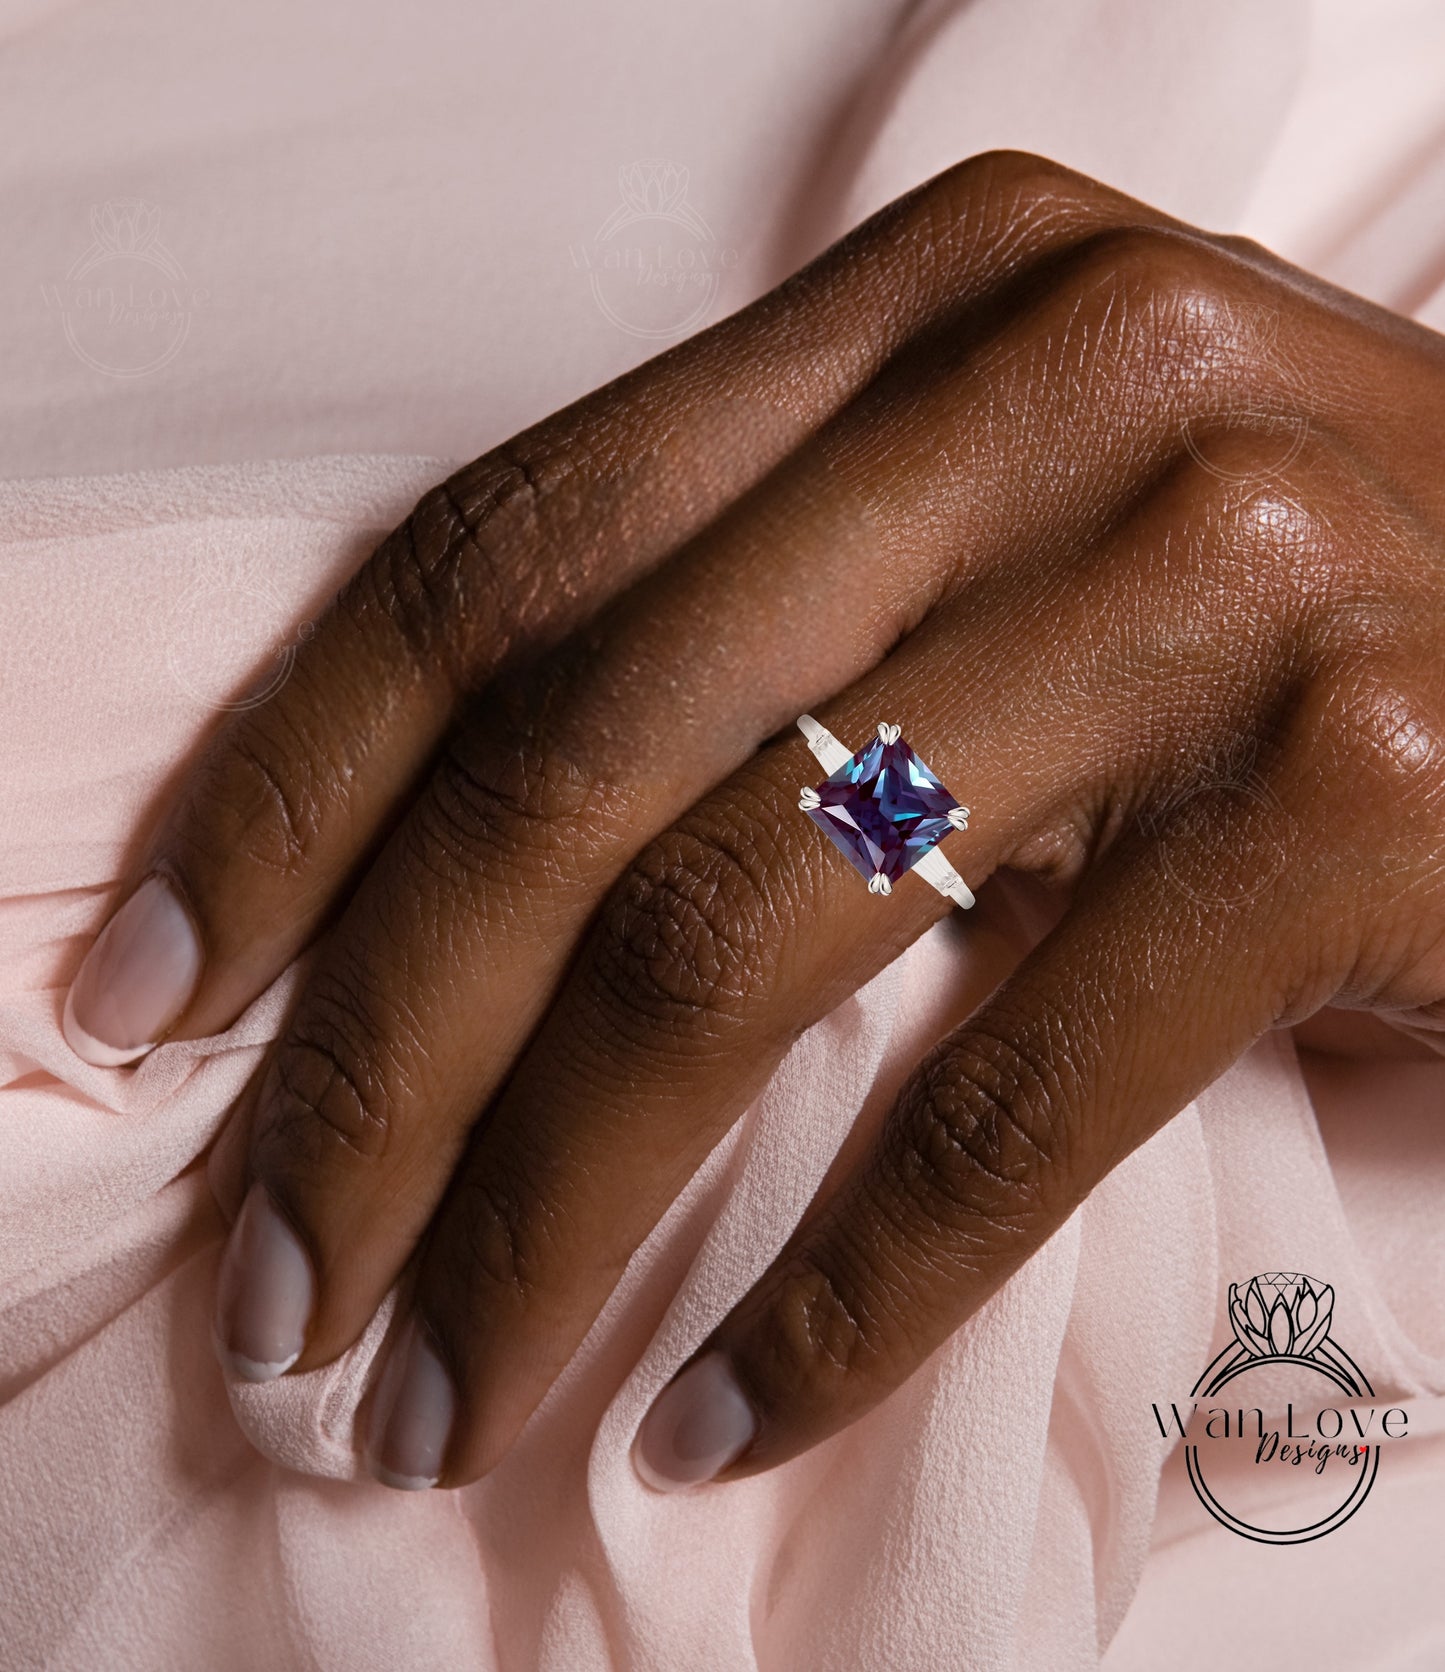 3 stone Alexandrite Princess Bridal Ring, Tapered Baguette Cut Moissanite Engagement Ring, Wedding Promise Ring For Her, Anniversary Ring